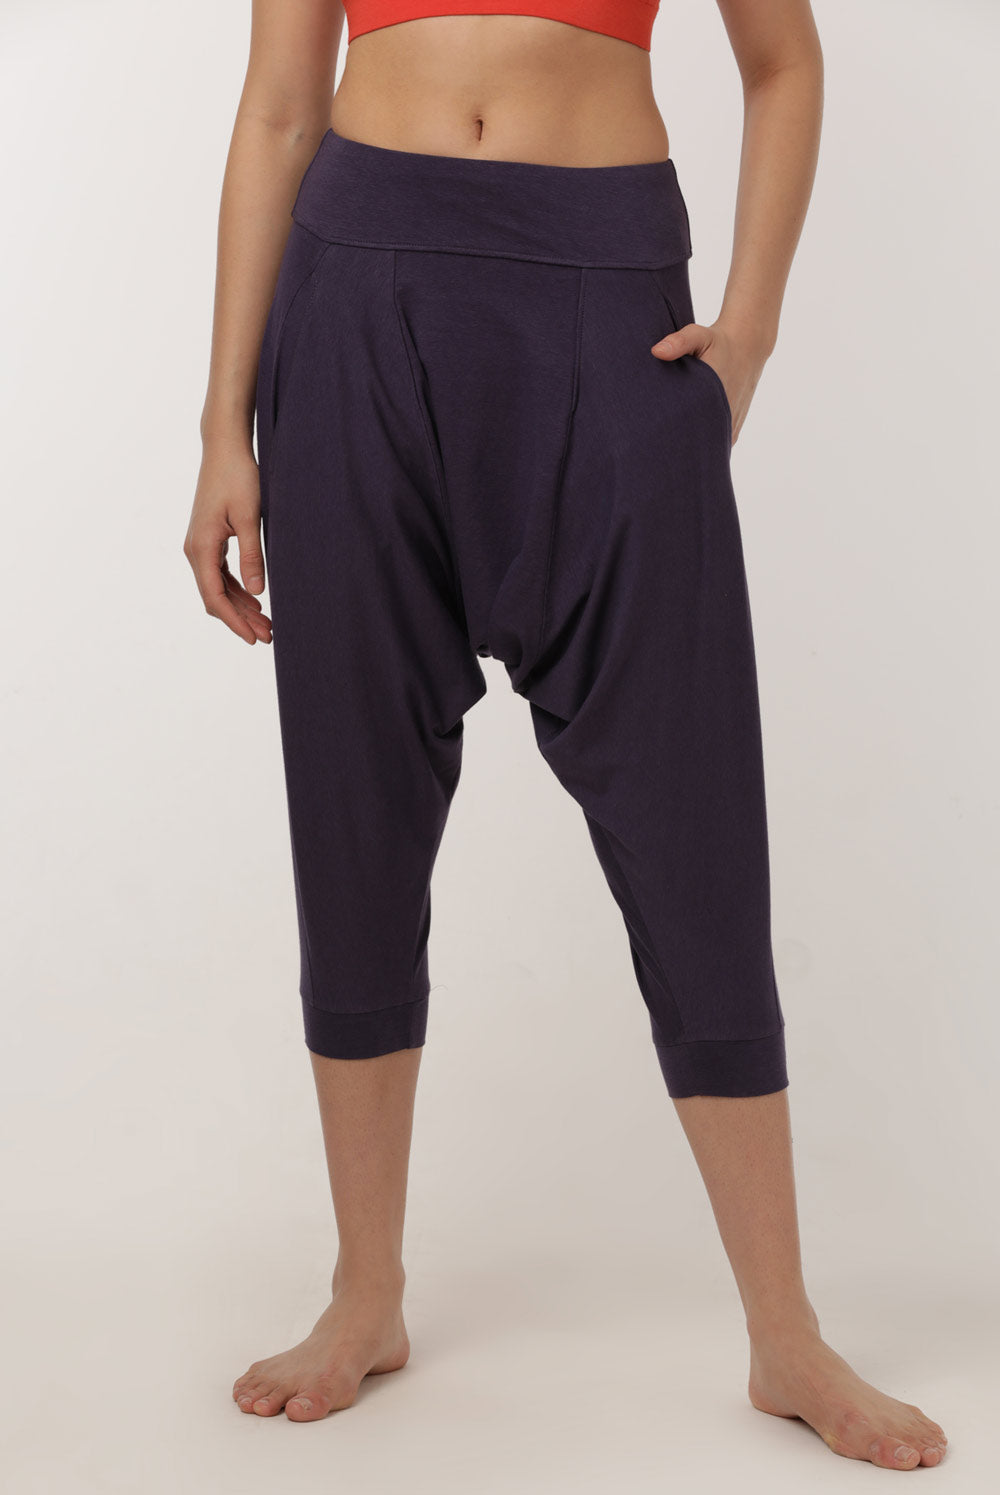  Proyog - Women's Yoga Pants / Women's Yoga Clothing: Clothing &  Accessories